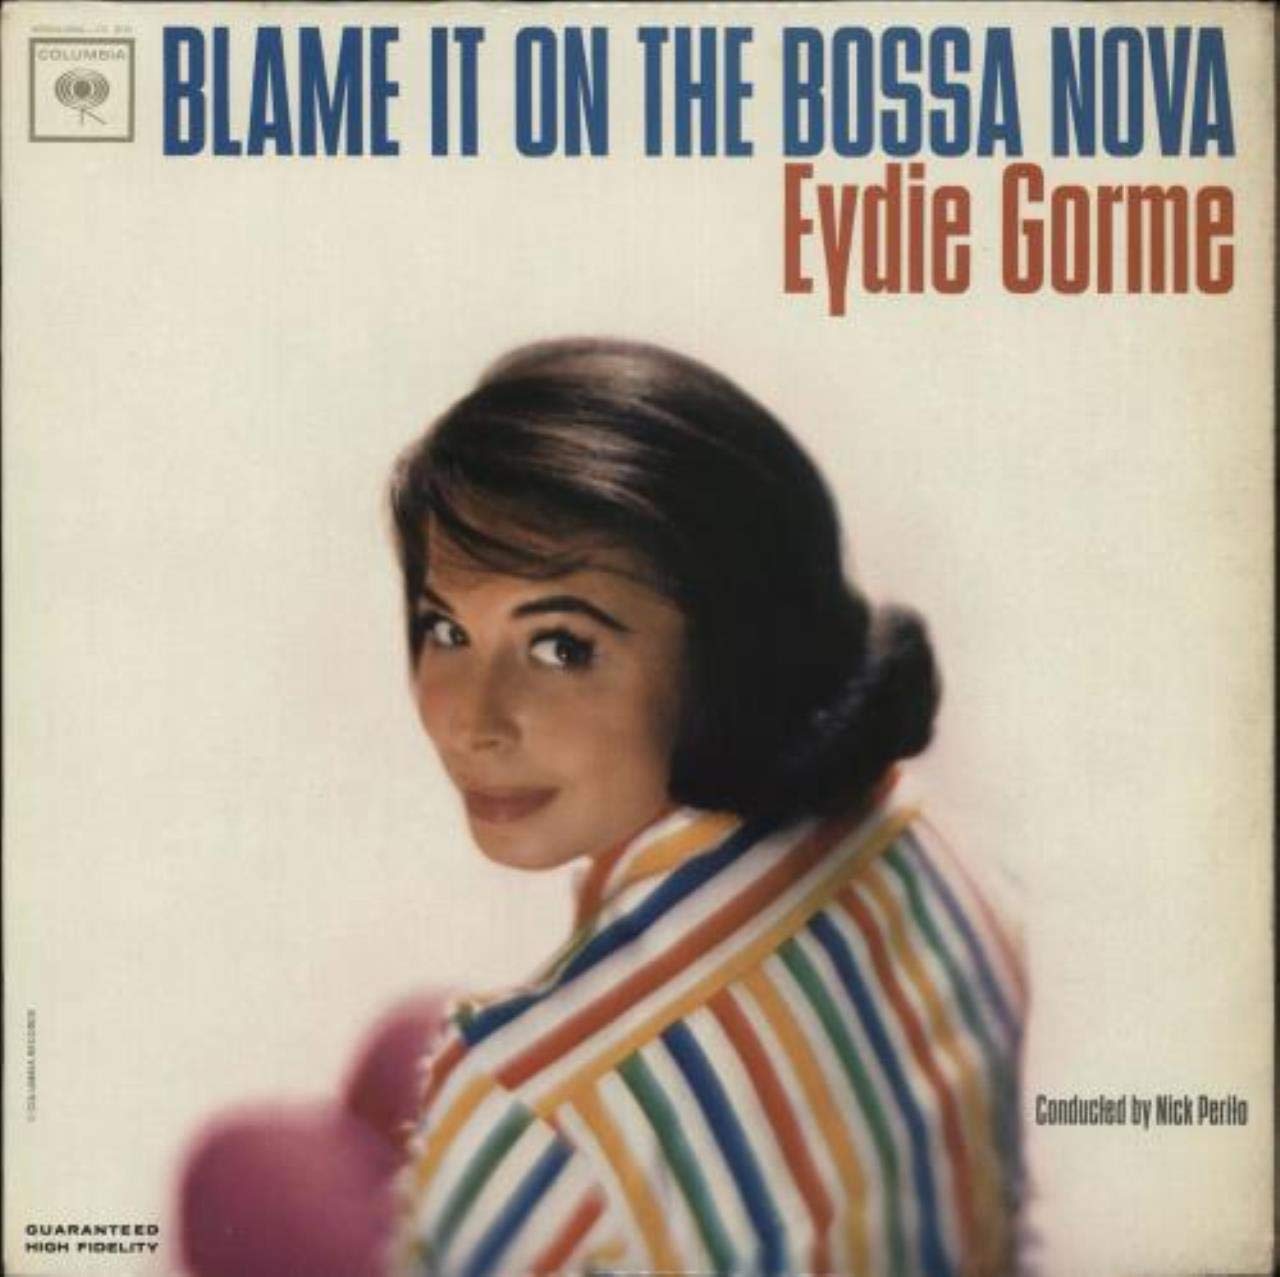 Eydie Gormé - Blame It on the Bossa Nova - Reviews - Album of The Year